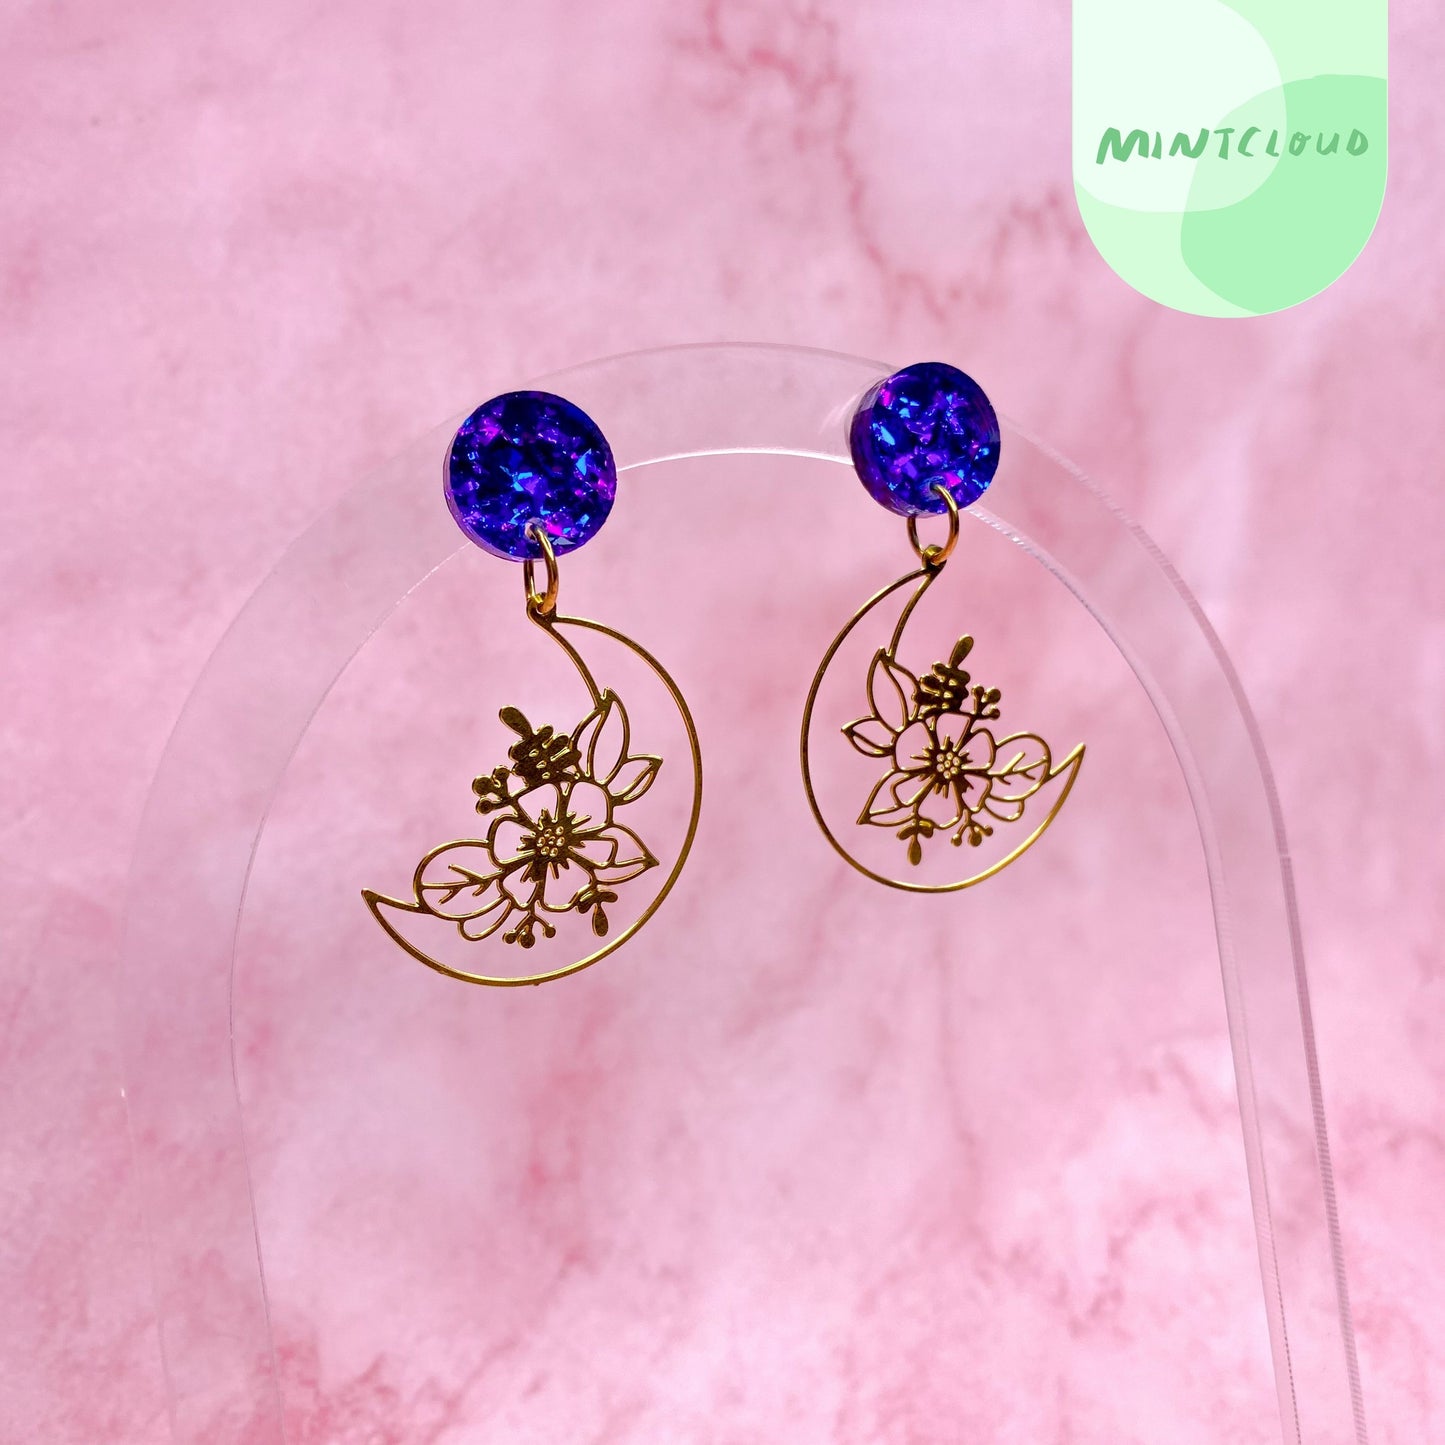 Brass Dangles - Moon Bloom From Mintcloud Studio, an online jewellery store based in Adelaide South Australia